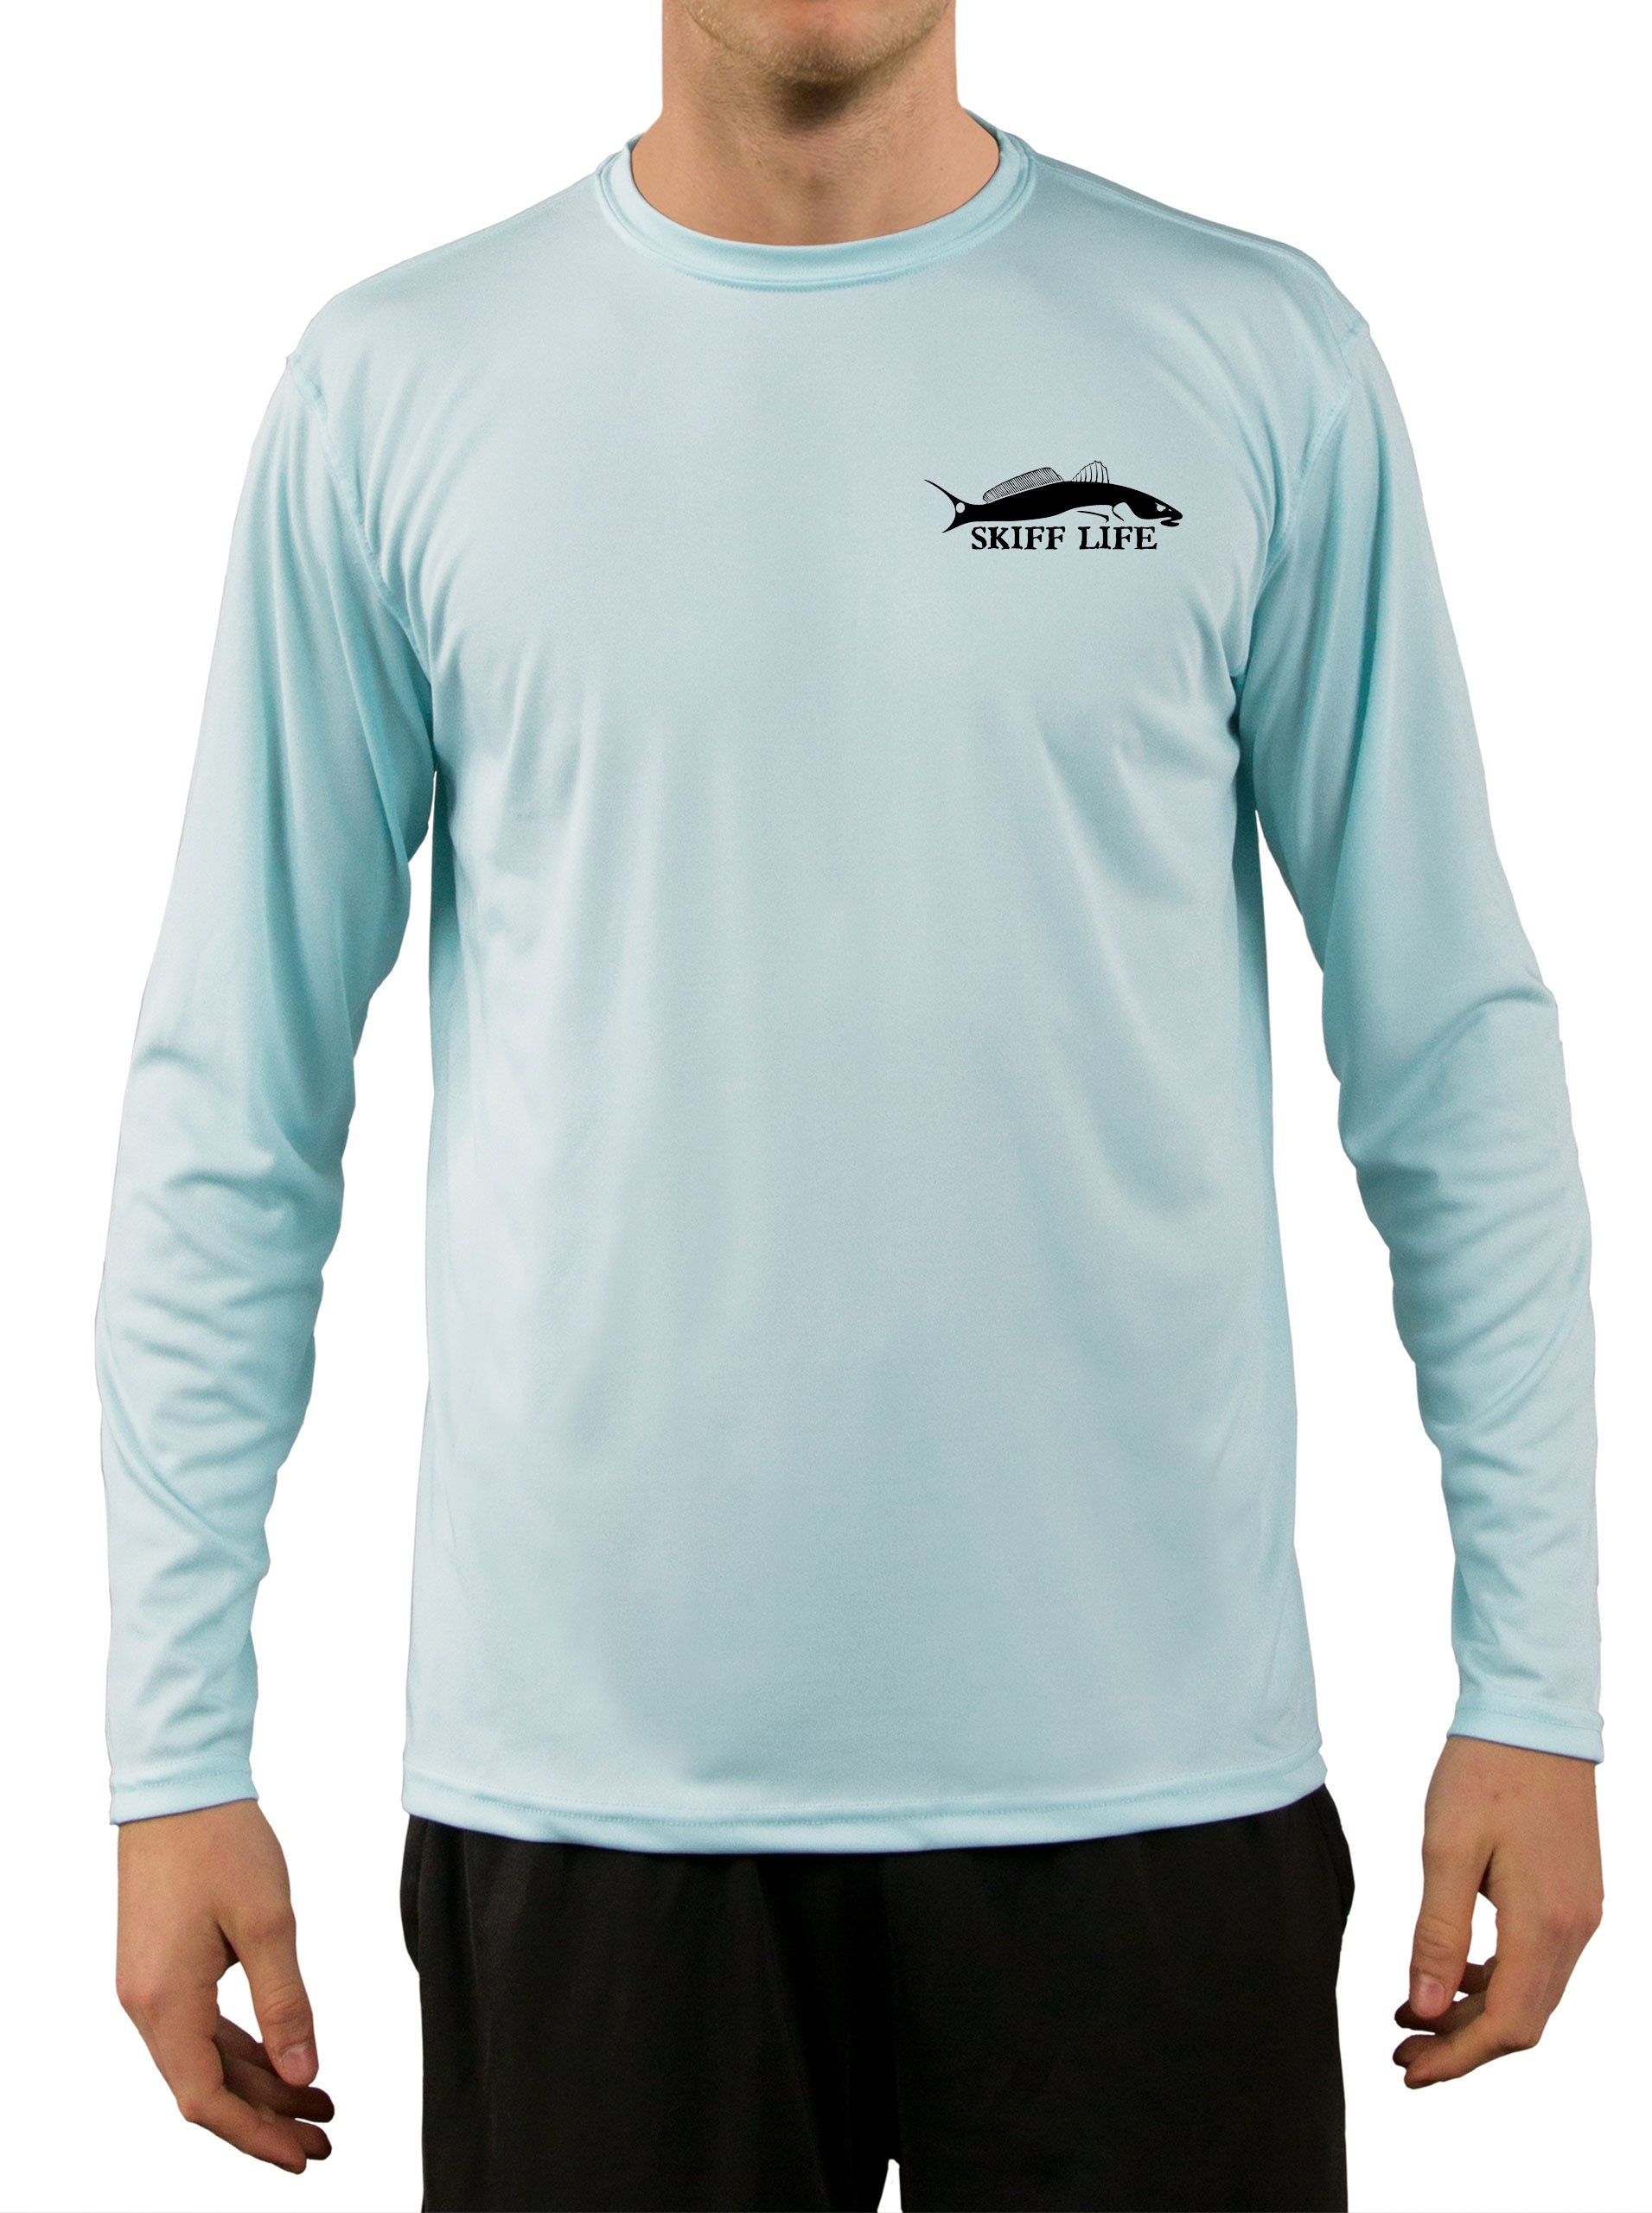 Fishing Shirts Men's Quick Dry Lightweight UPF 50 Long, 57% OFF